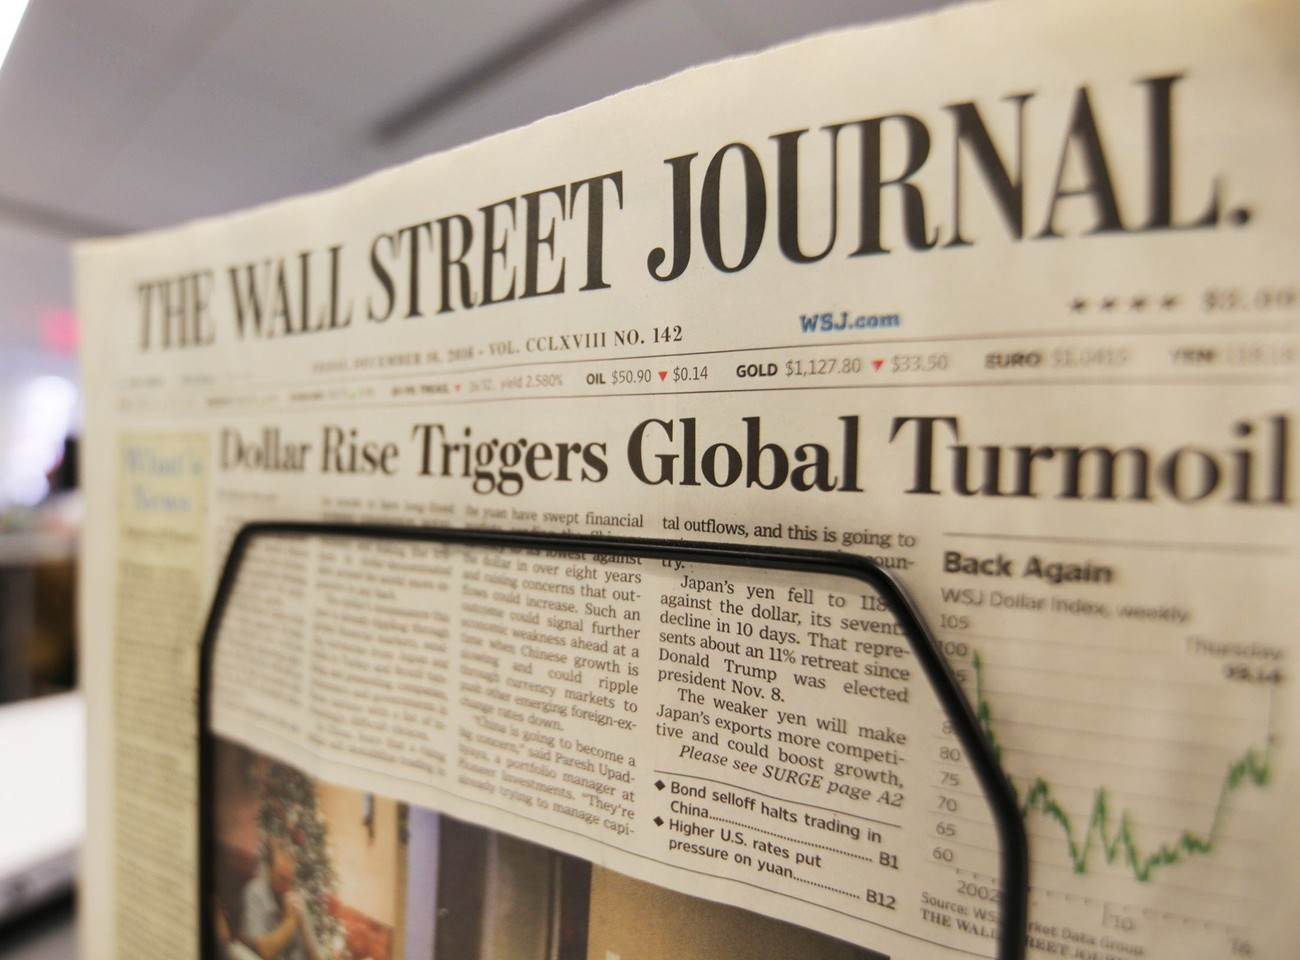 Wall Street Journal subscription discounts